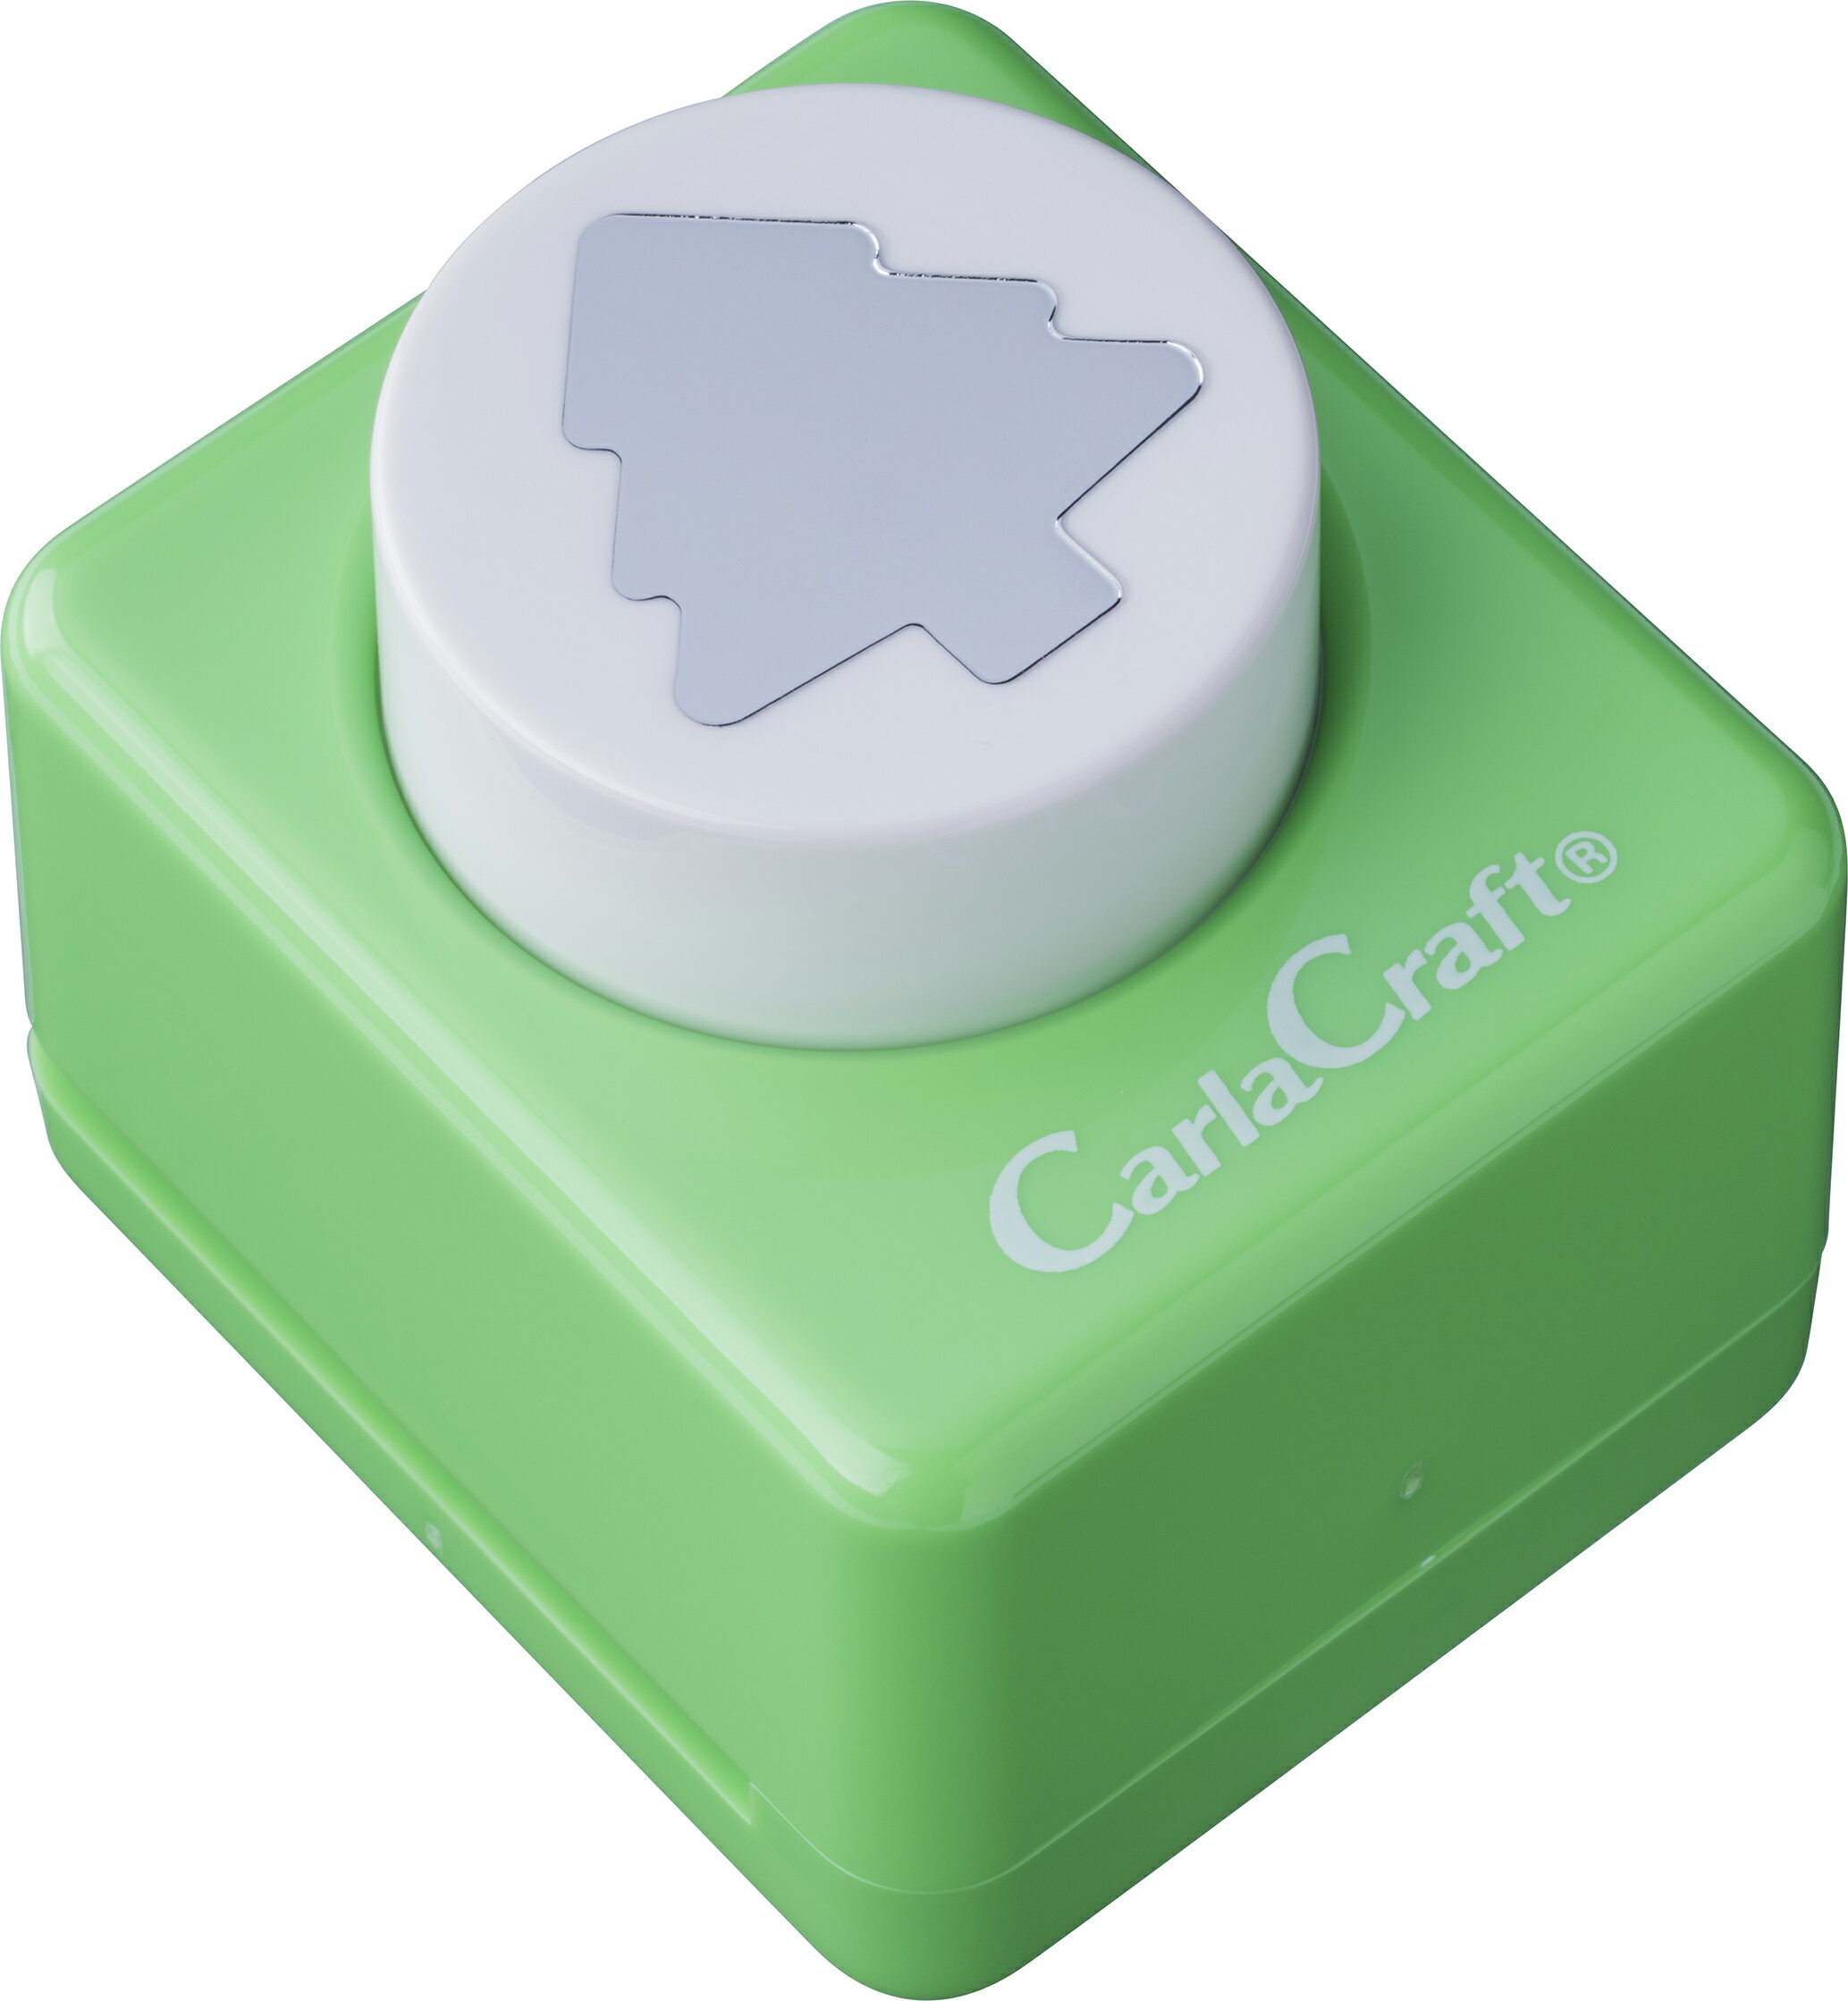 CARL/カール事務器 クラフトパンチ キ CP-2 CARL/カール事務器事務器 4971760145026